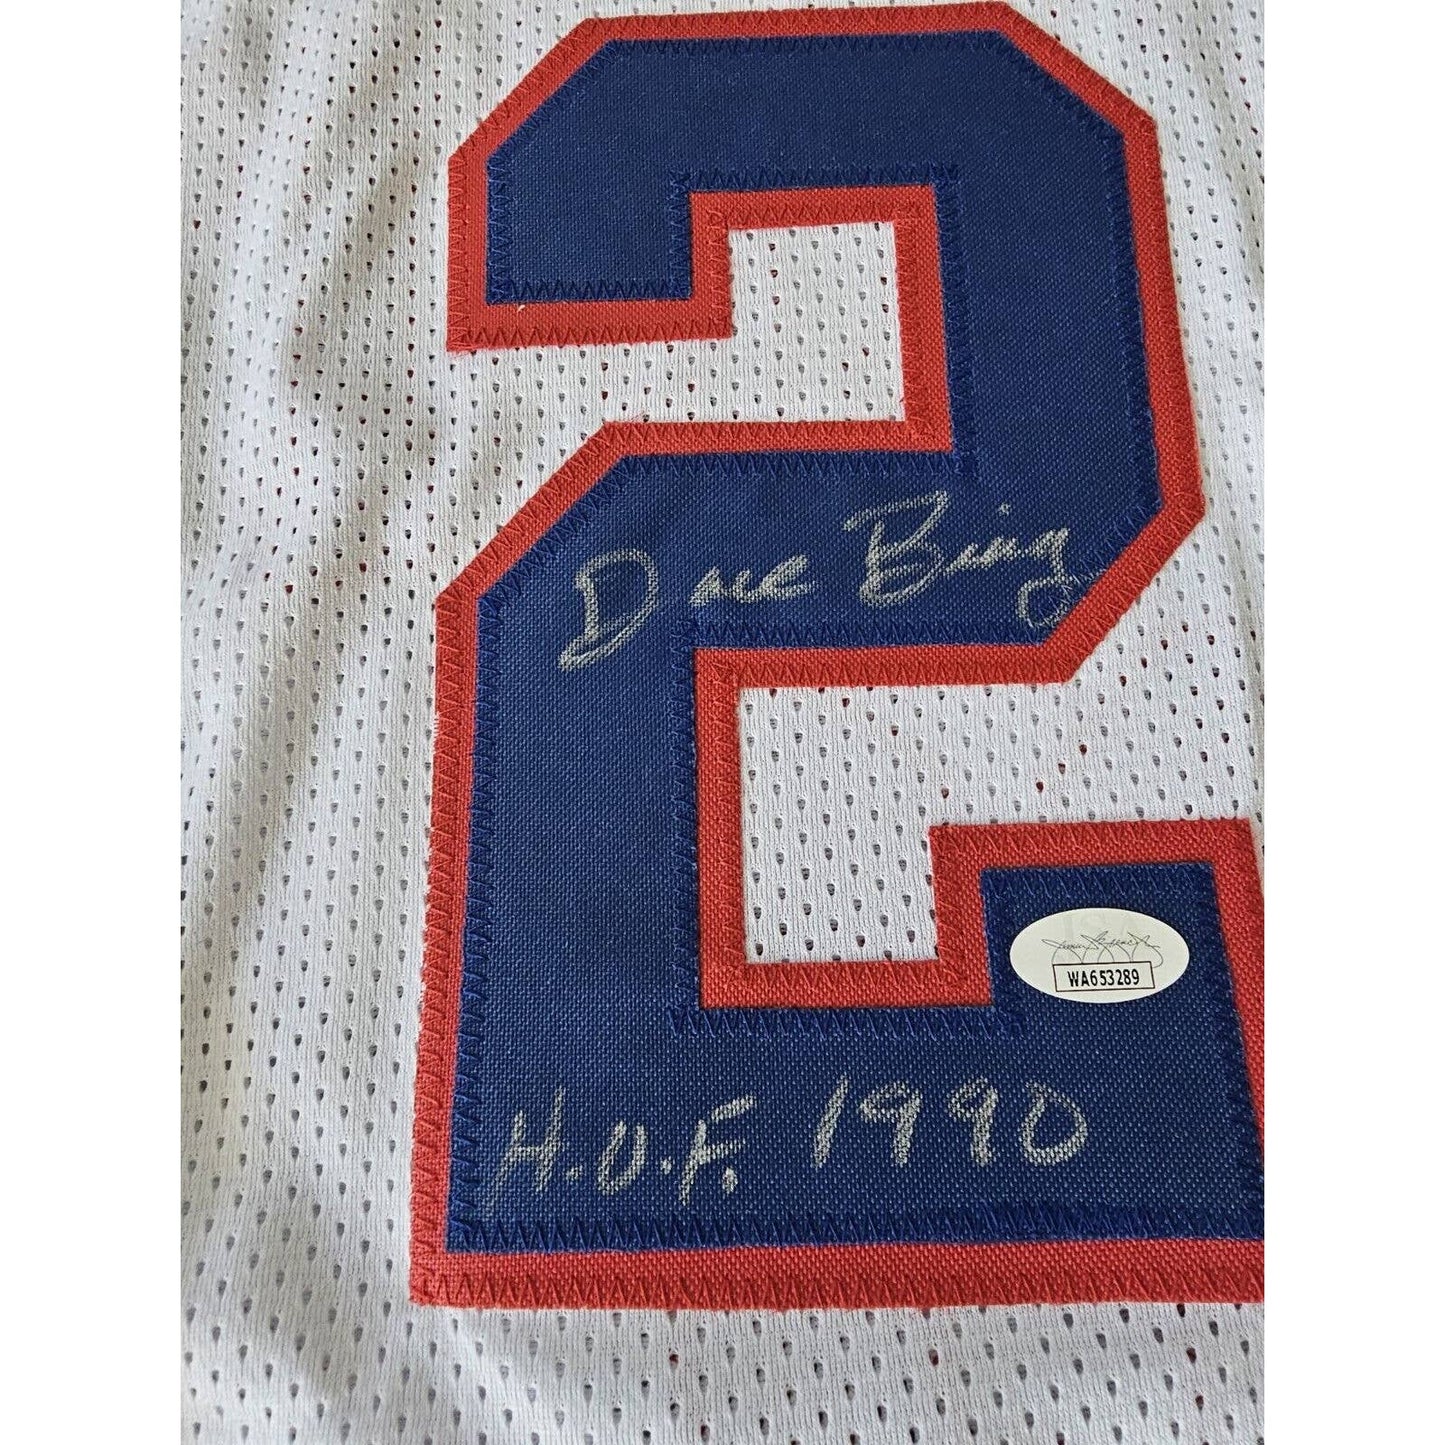 Dave Bing Autographed/Signed Jersey JSA COA Detroit Pistons